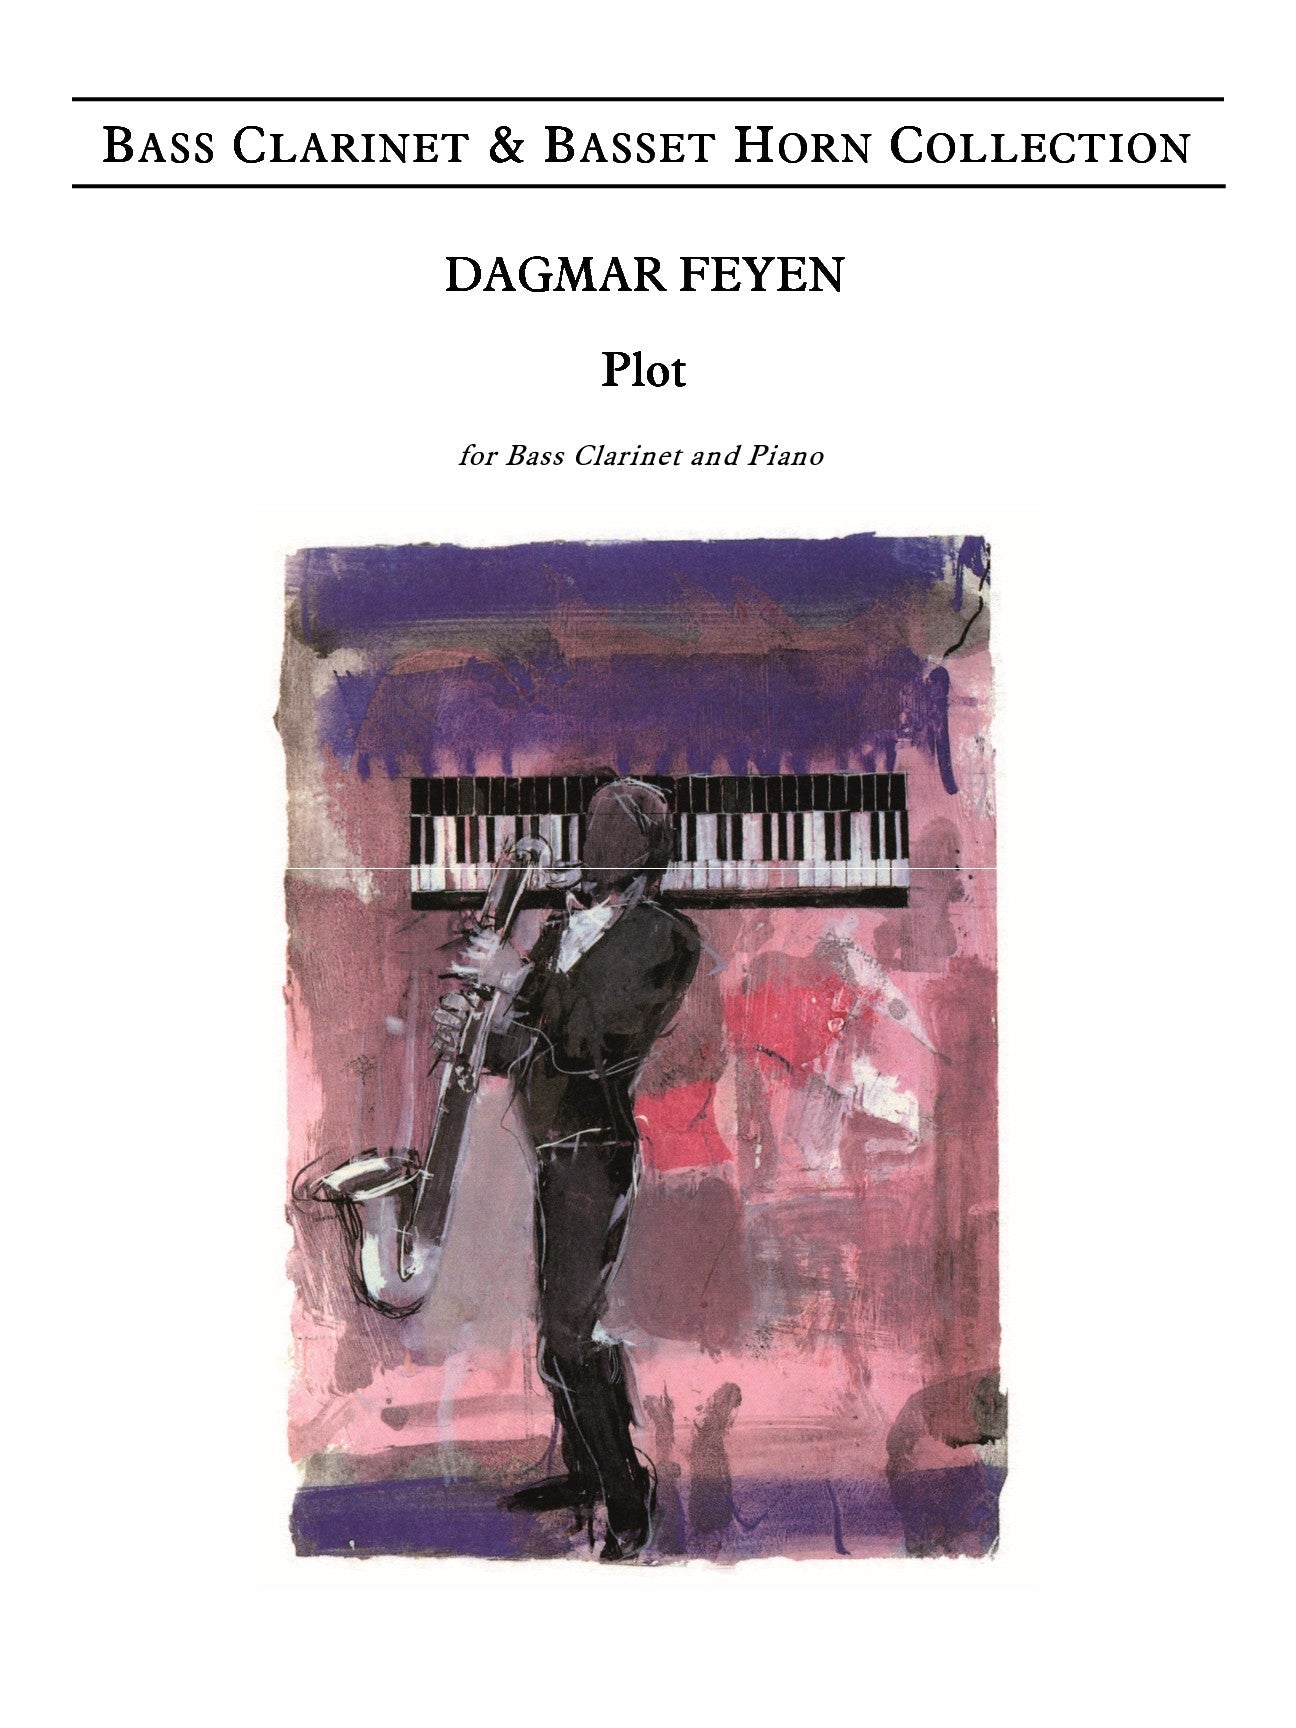 Feyen - Plot for Bass Clarinet and Piano